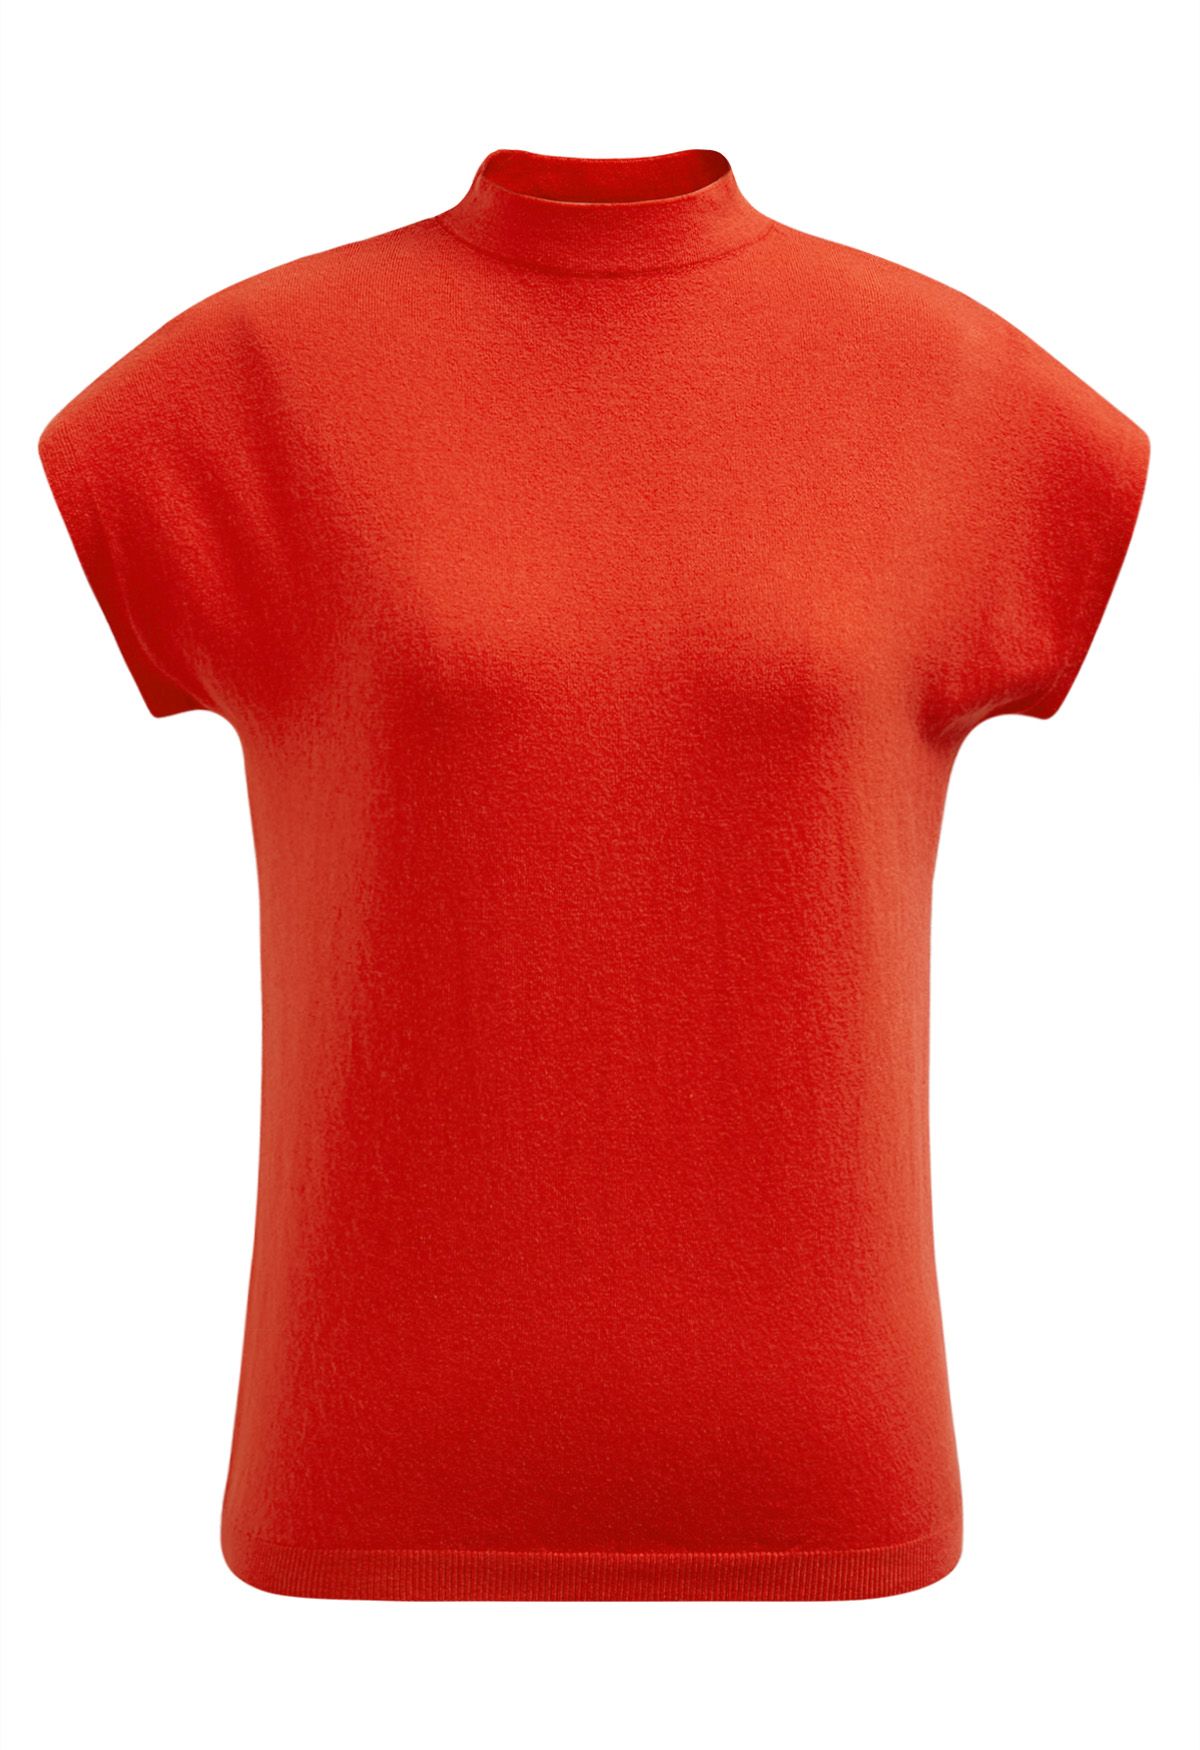 Solid Color Cap Sleeves Knit Top in Orange